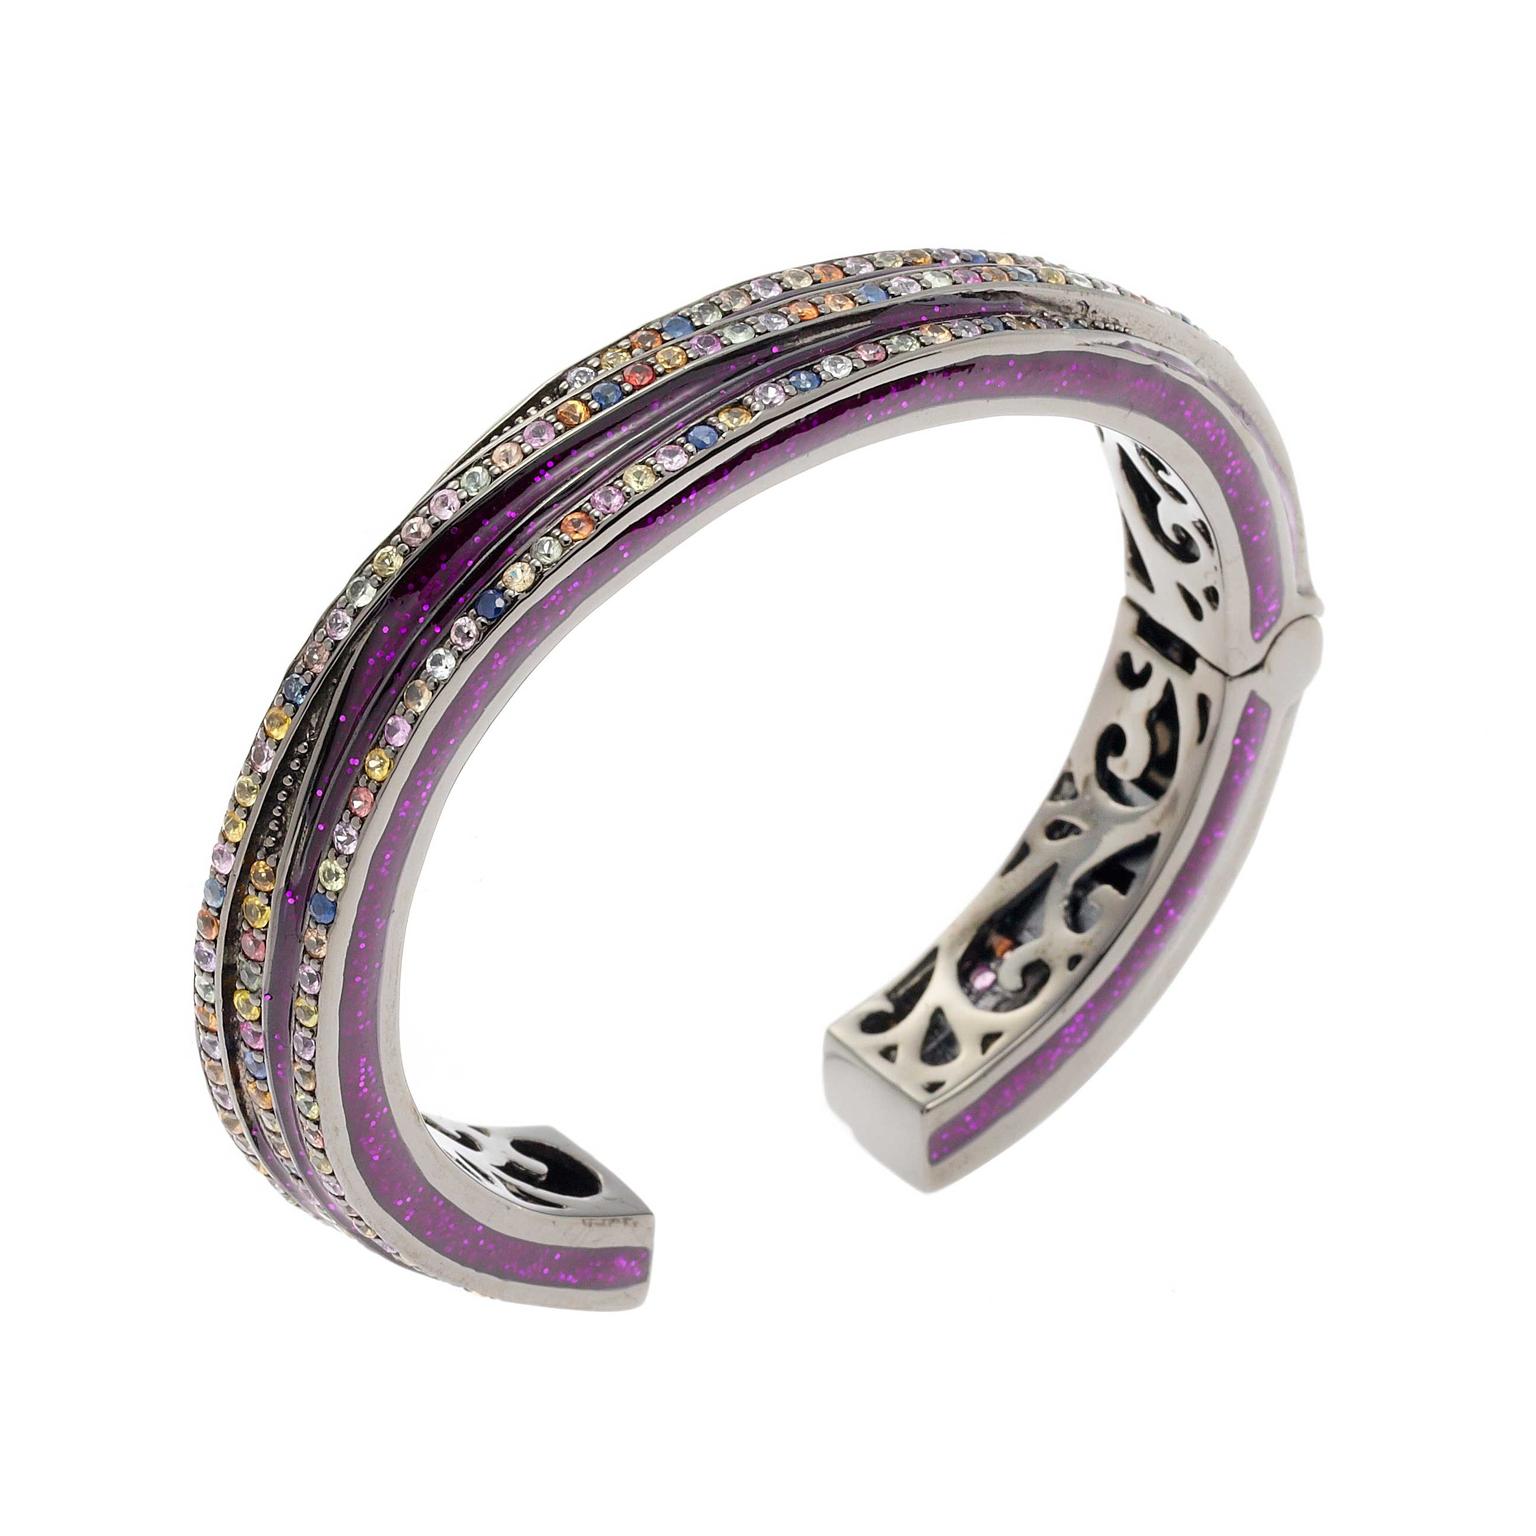 Matthew Campbell Laurenza silver purple glitter bangle set with sapphires in black rhodium